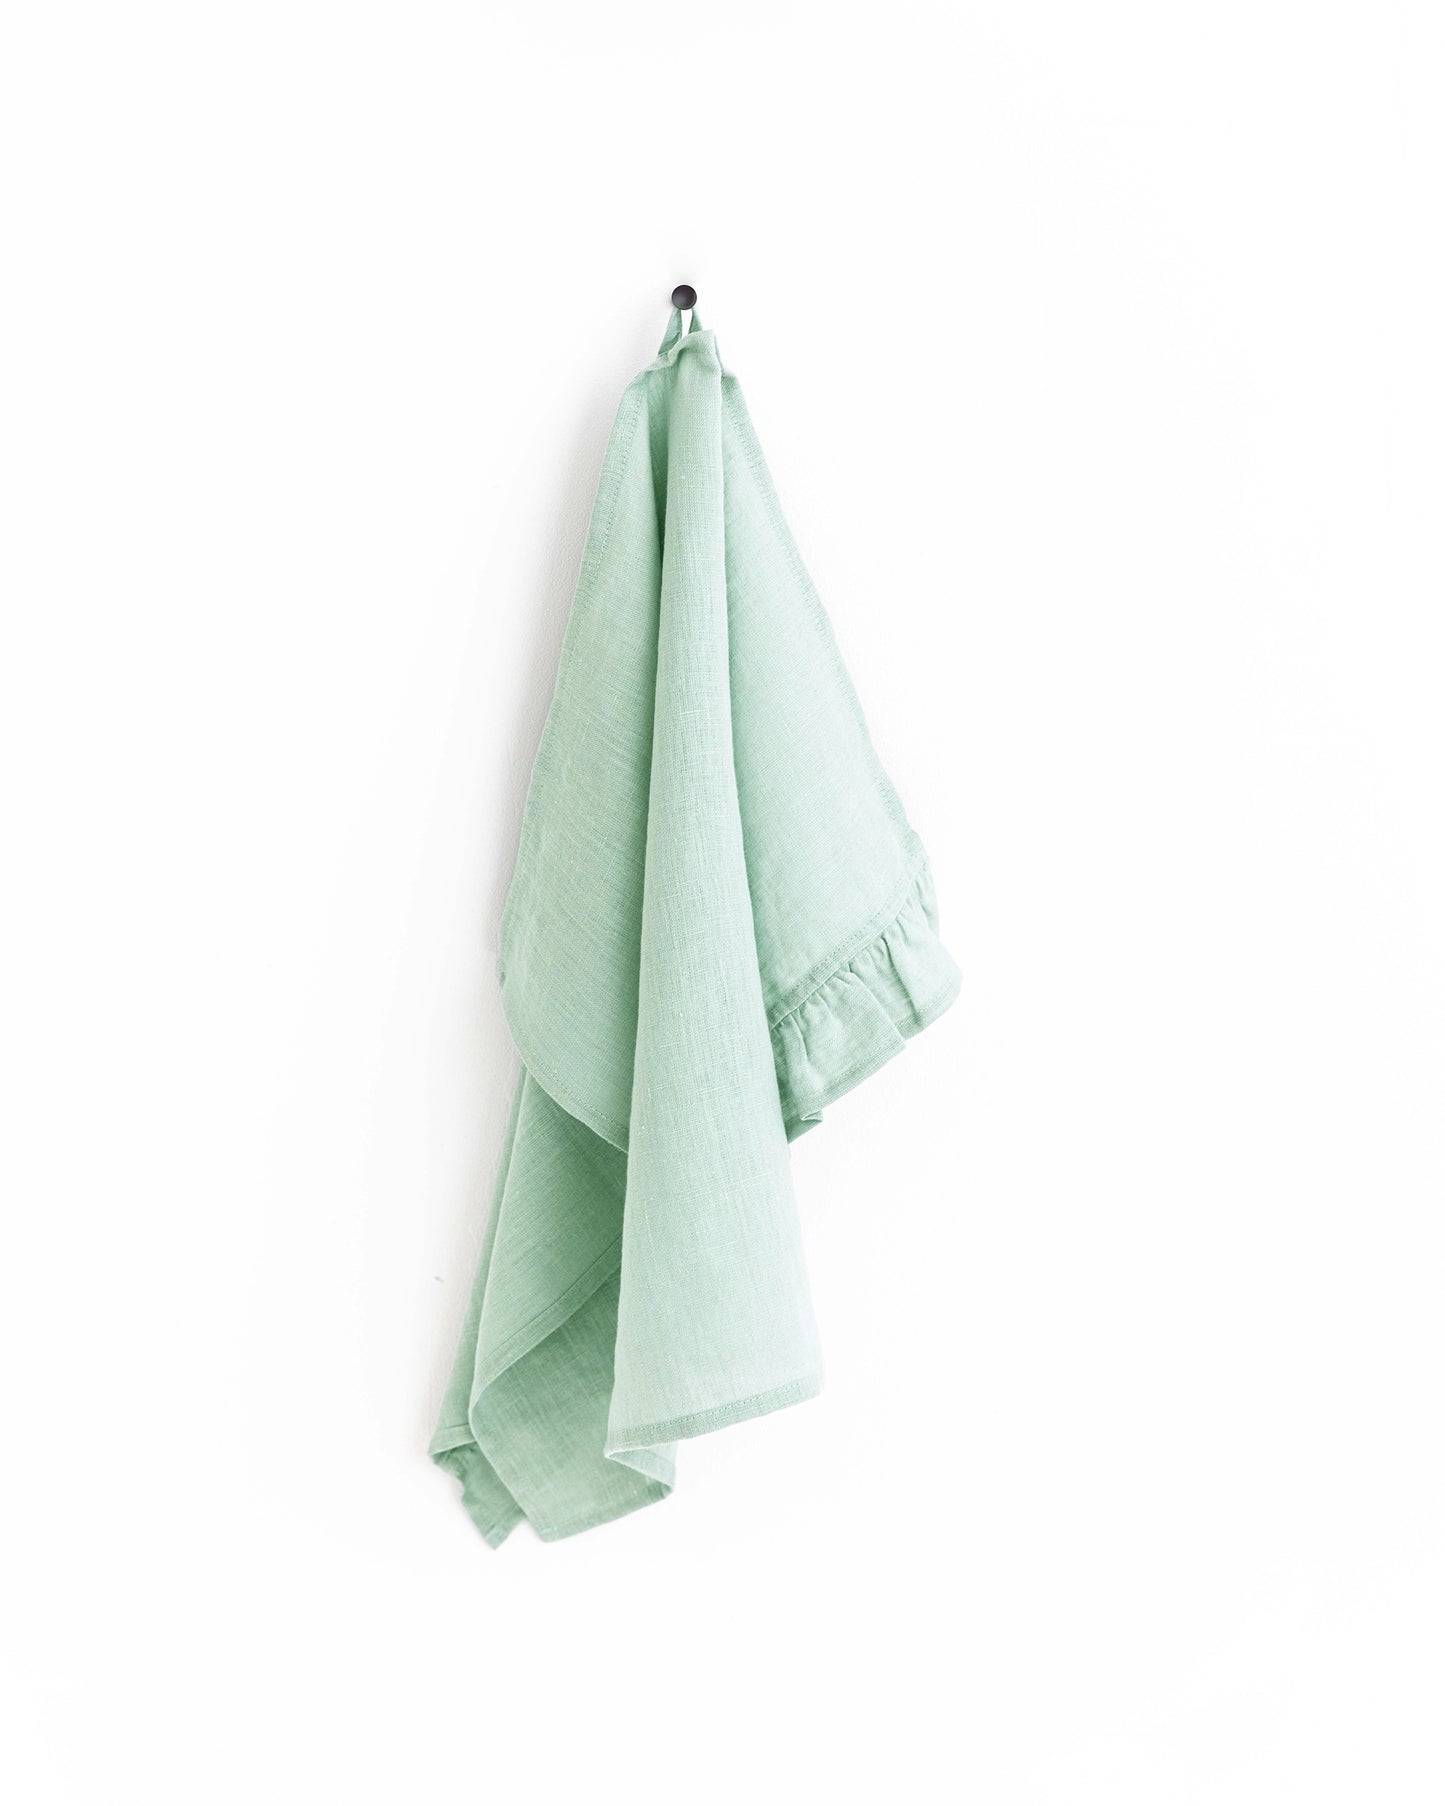 Ruffle trim linen tea towel in Sage green - MagicLinen